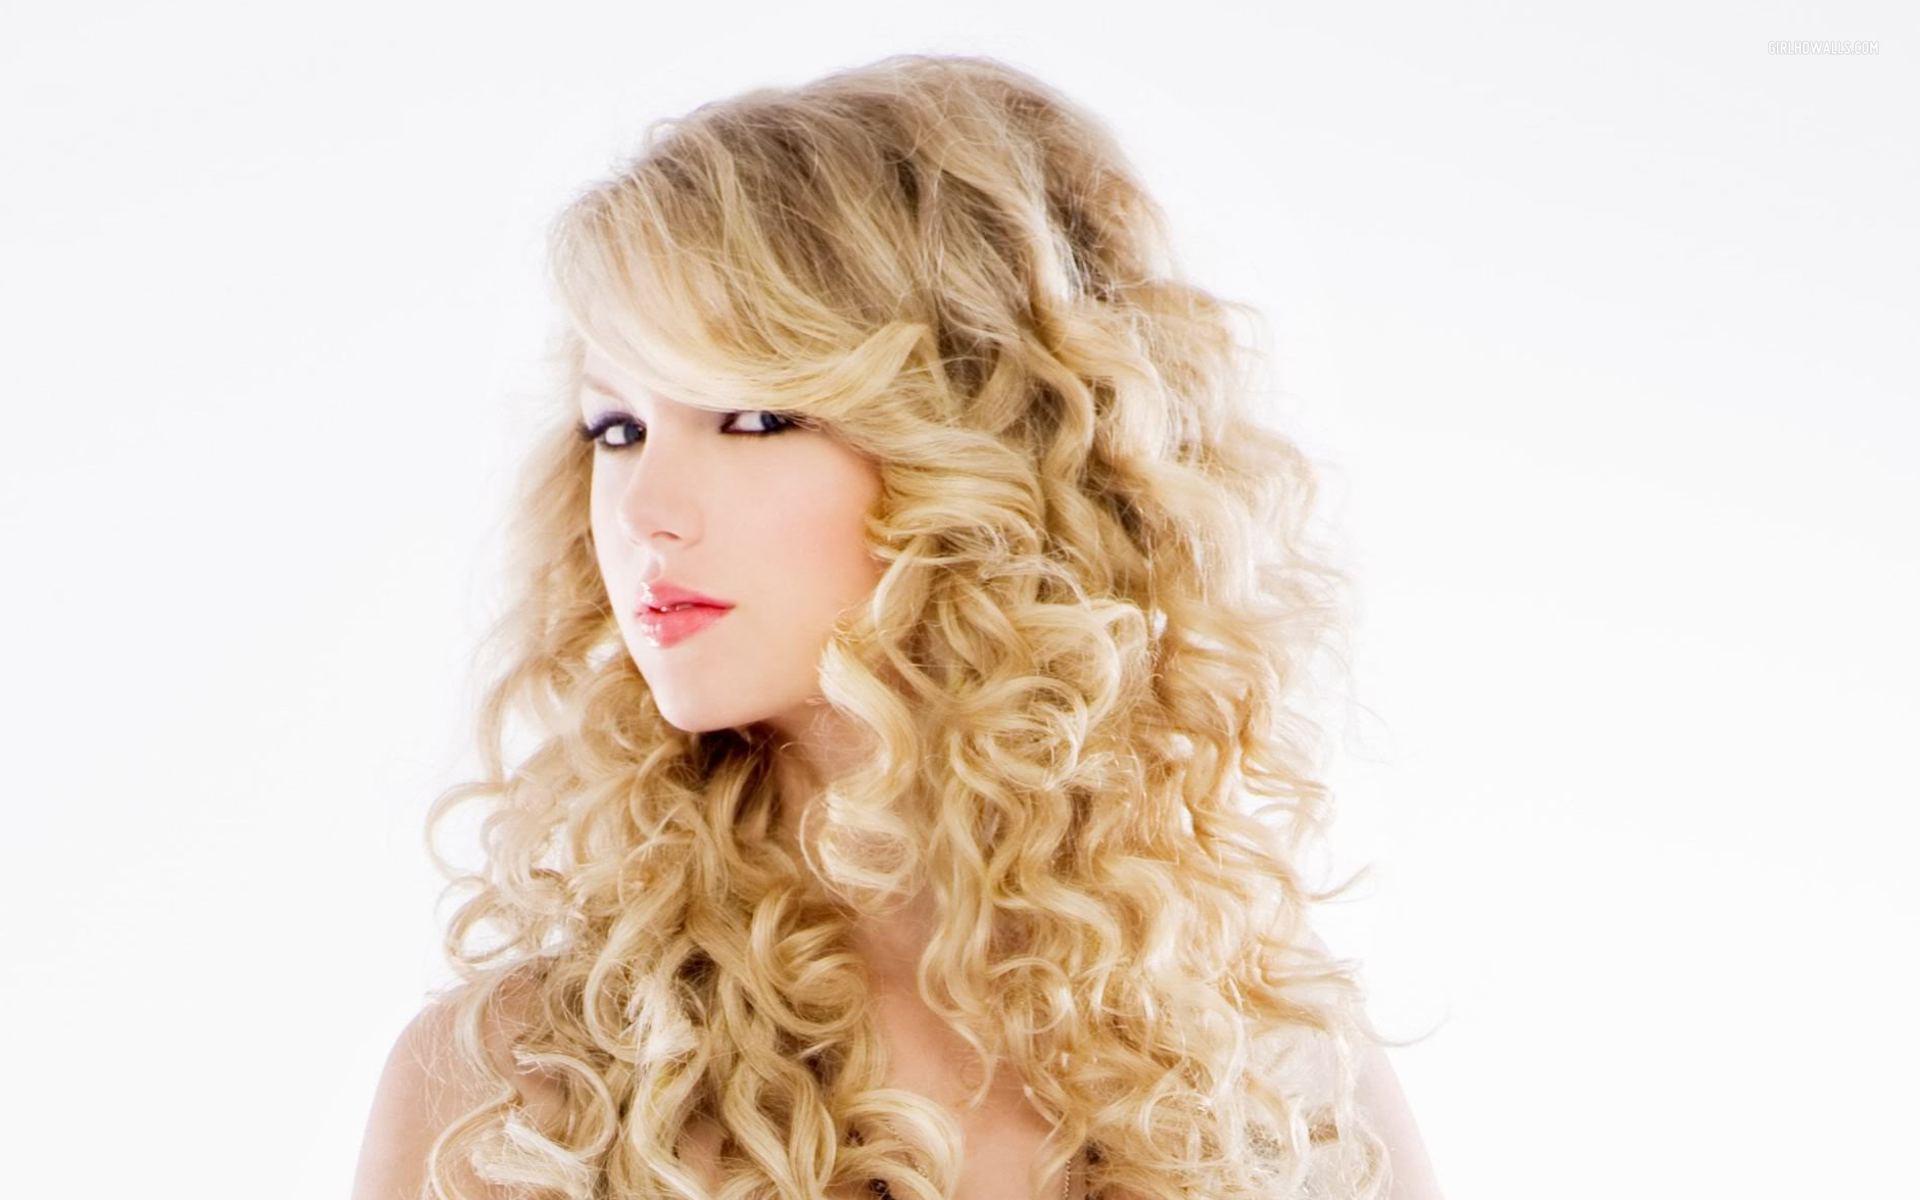 Taylor Swift Wallpaper Photo